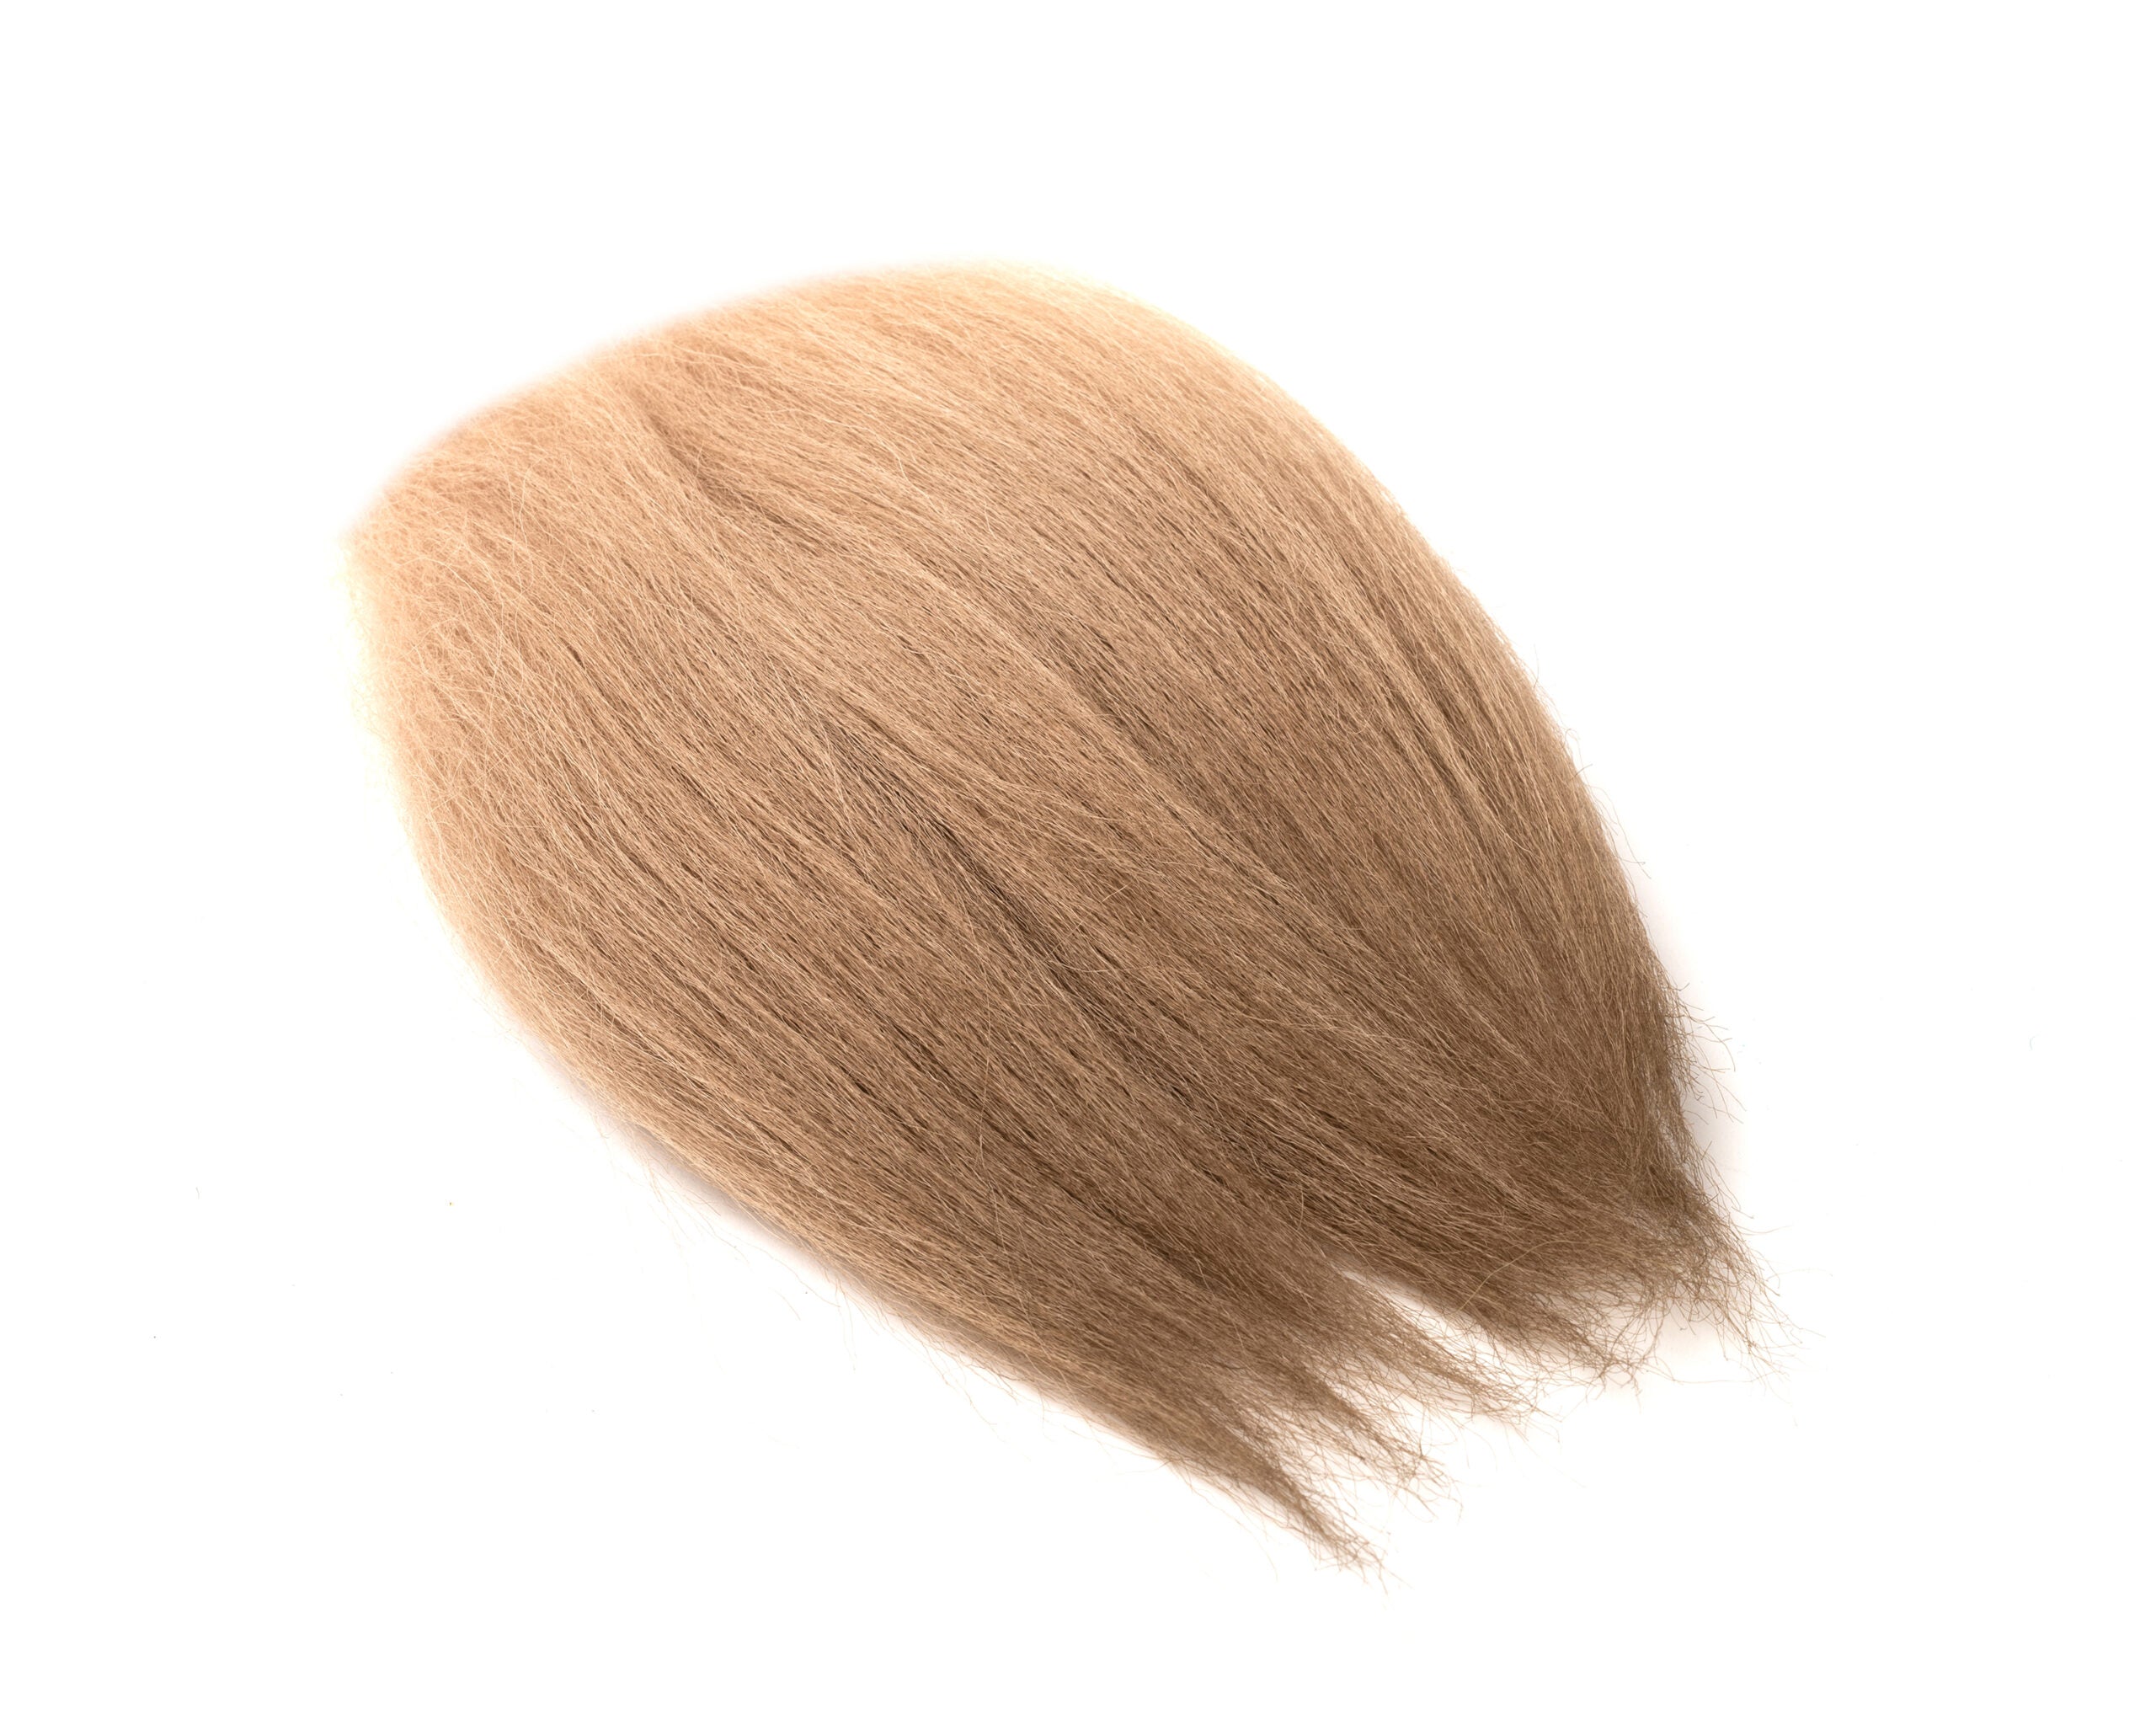 Nayat - Snowrunner Hair - Standard